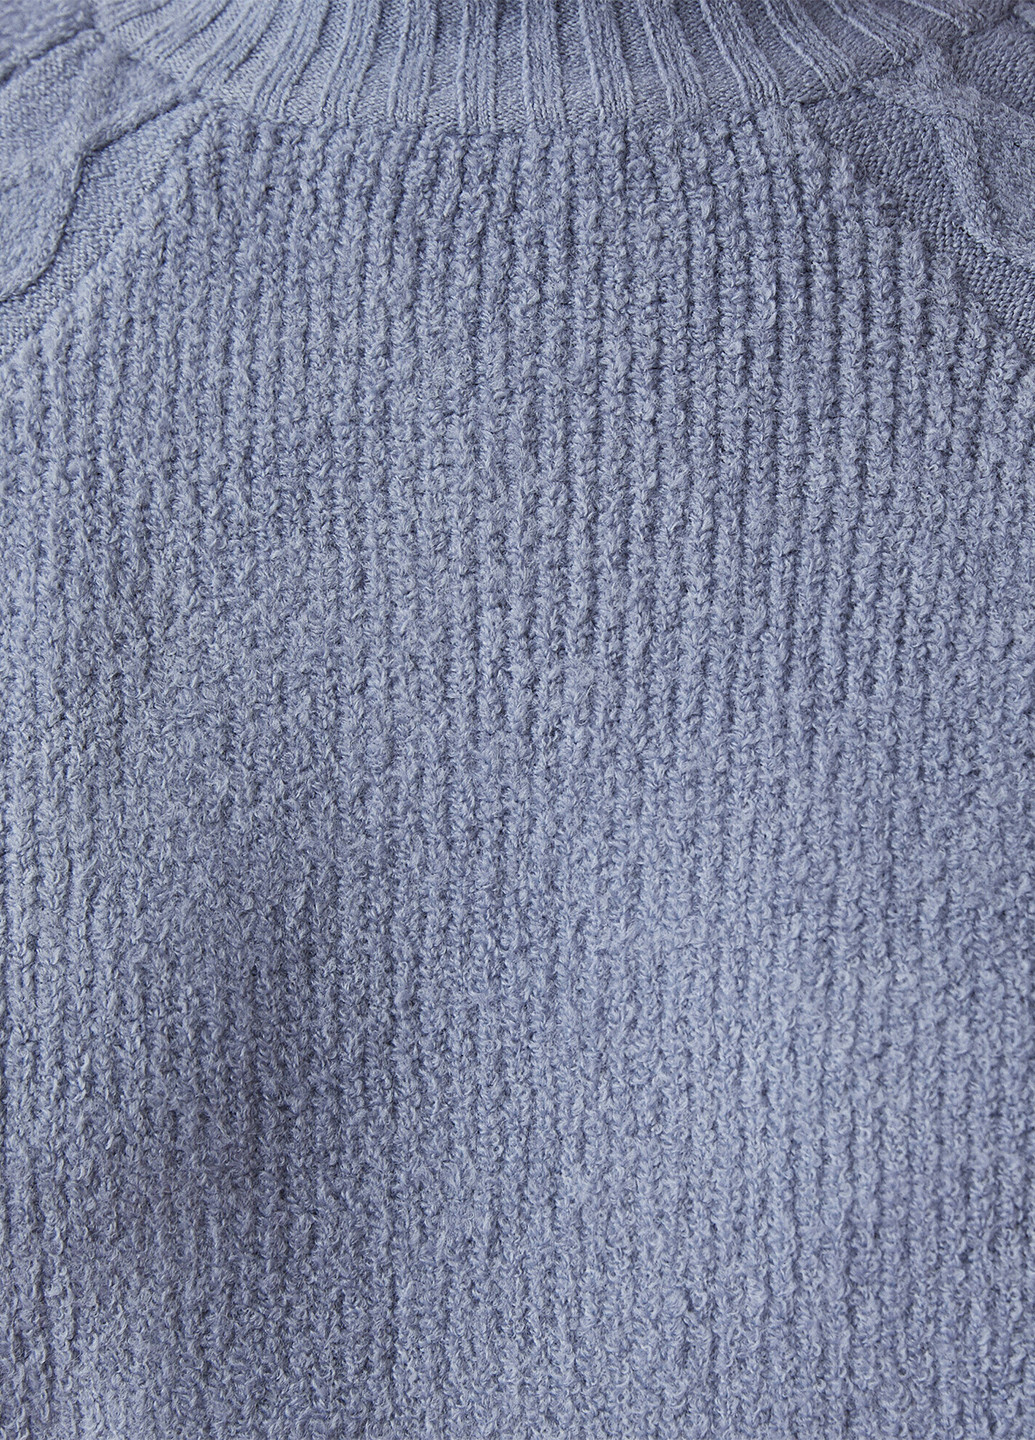 Голубой демисезонный свитер джемпер KOTON